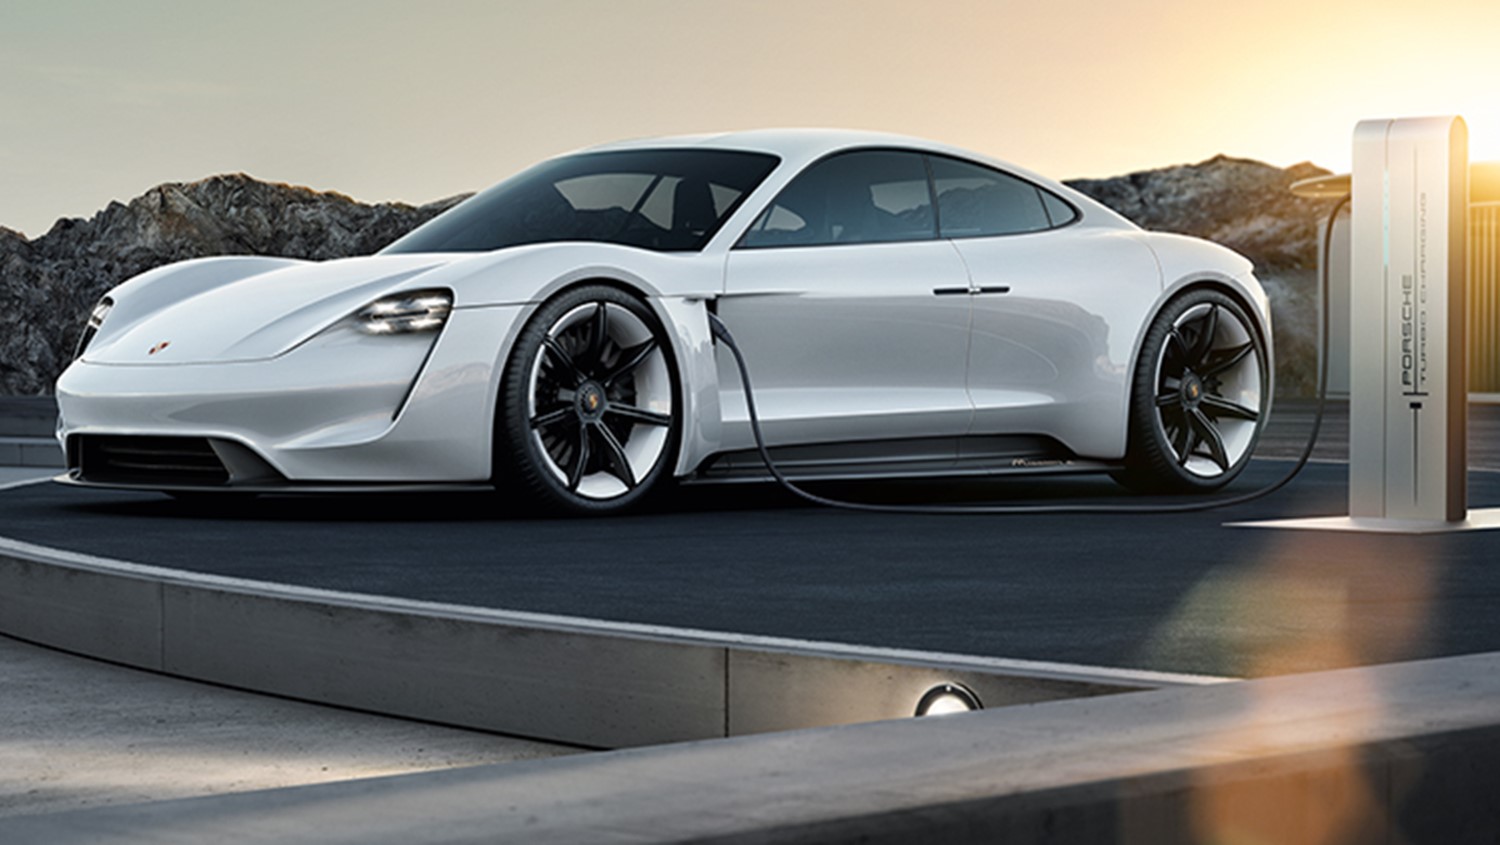 Porsche doubles EV investment plans in effort to beat Tesla